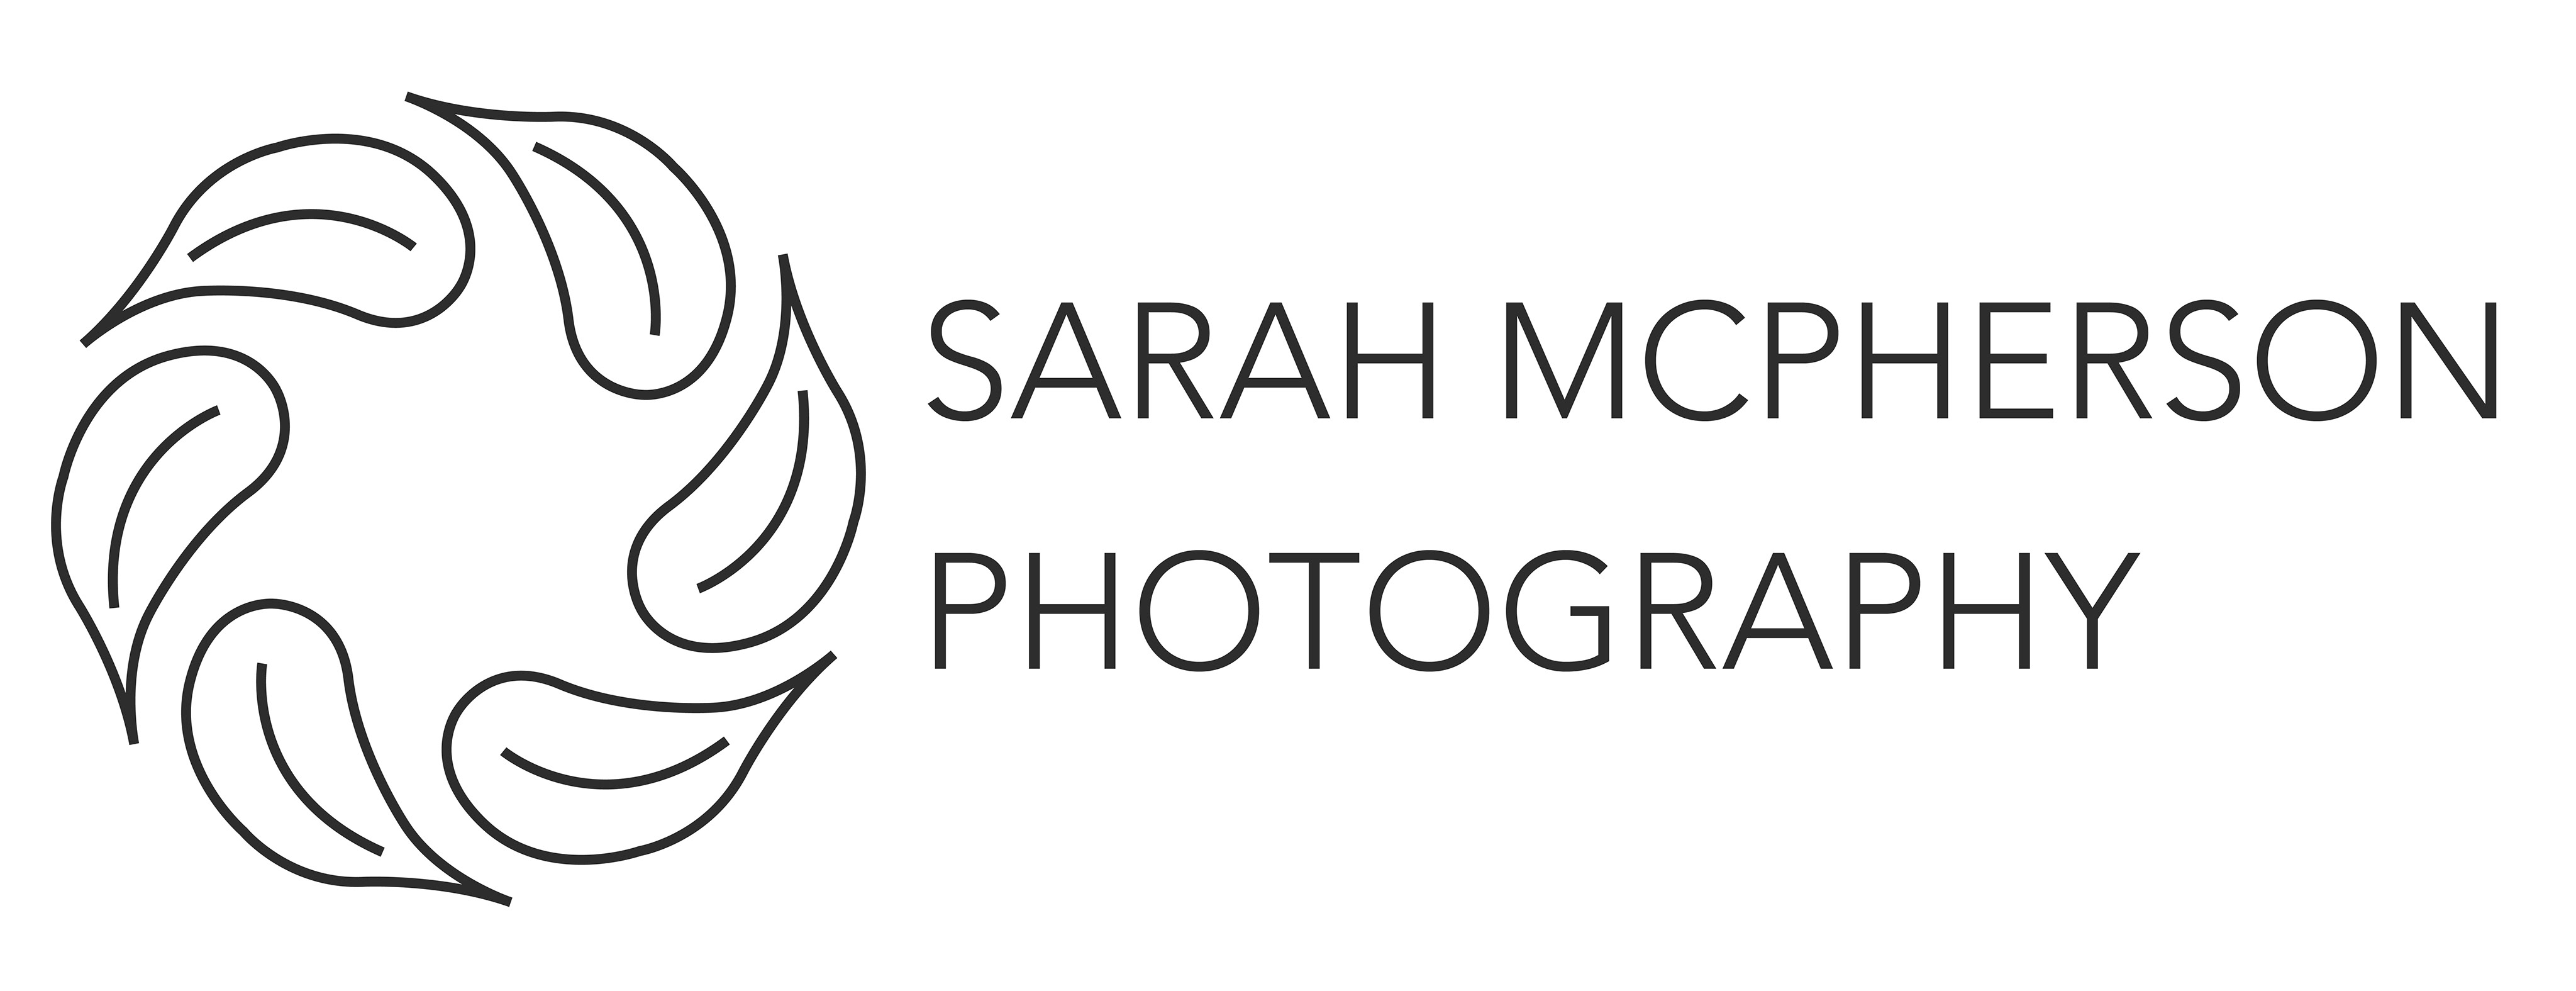 Sarah McPherson